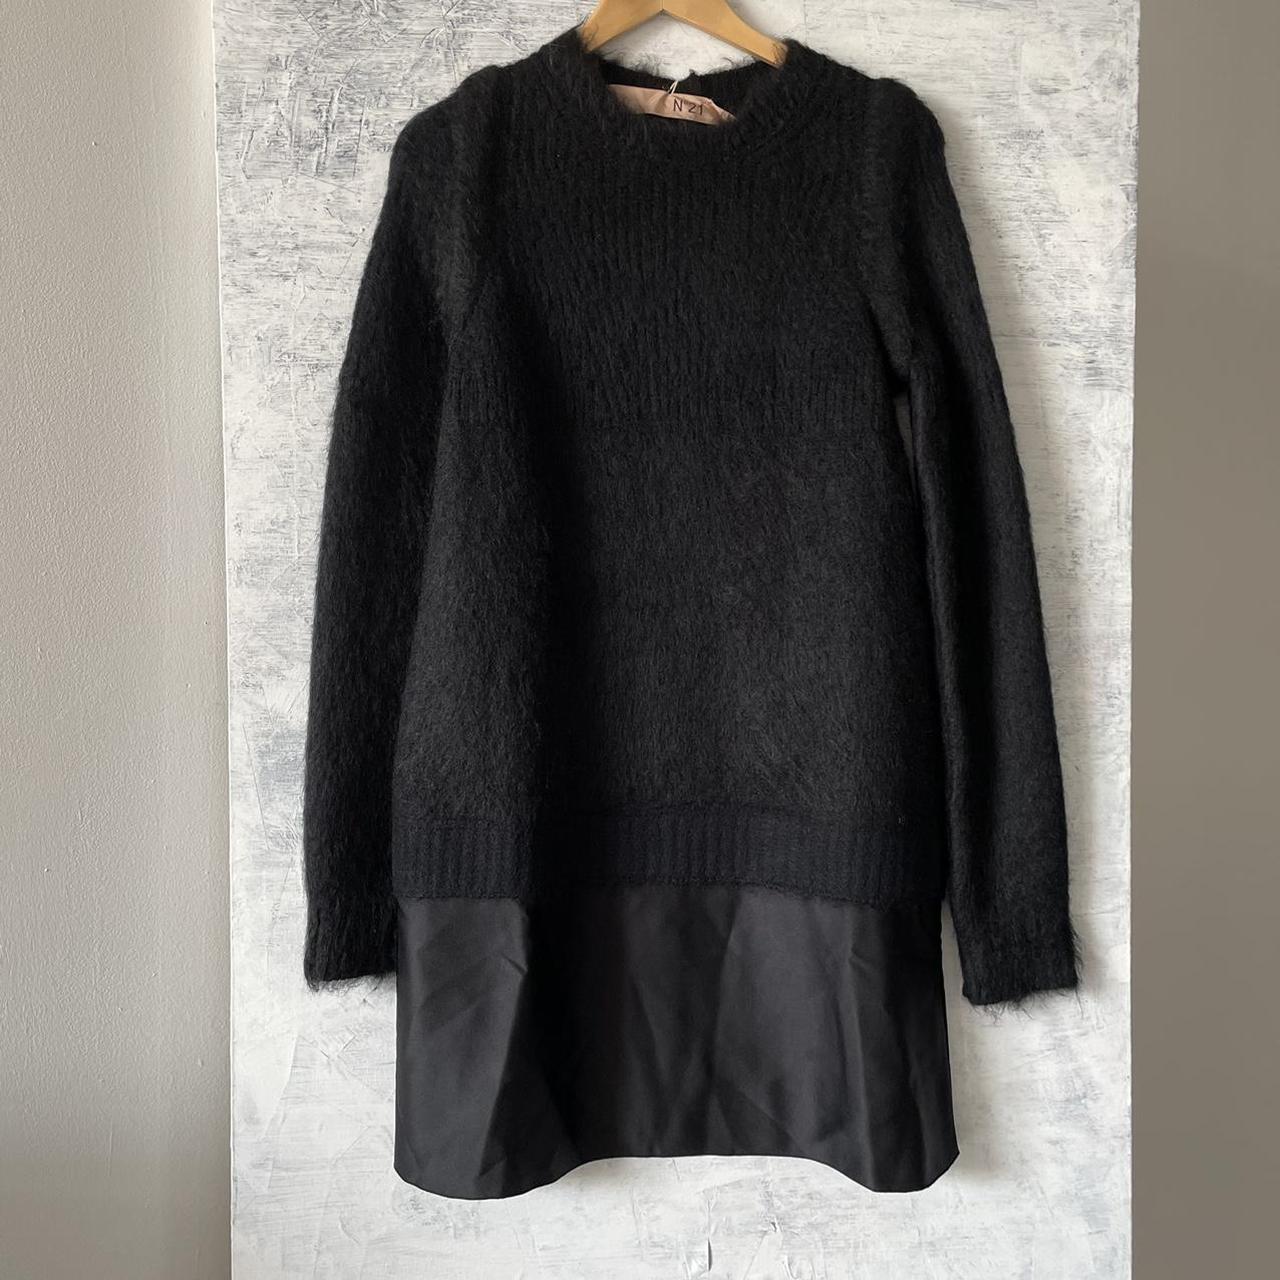 Product Image 1 - N°21 layered sweater dress

- pristine